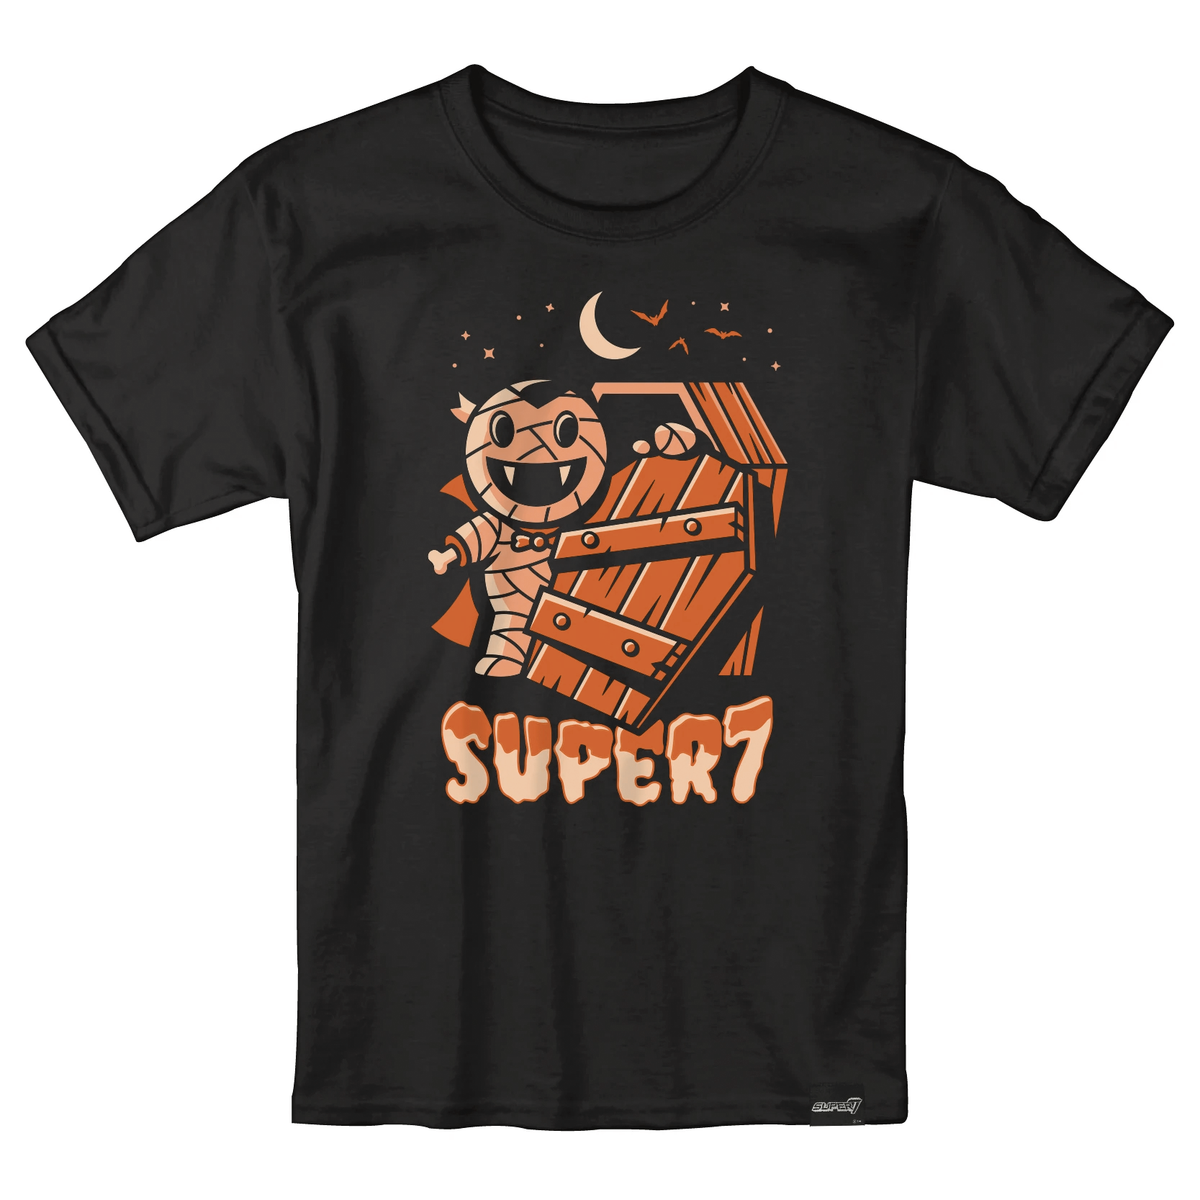 Super7 T-Shirt - Vampire Mummy Boy | Super7